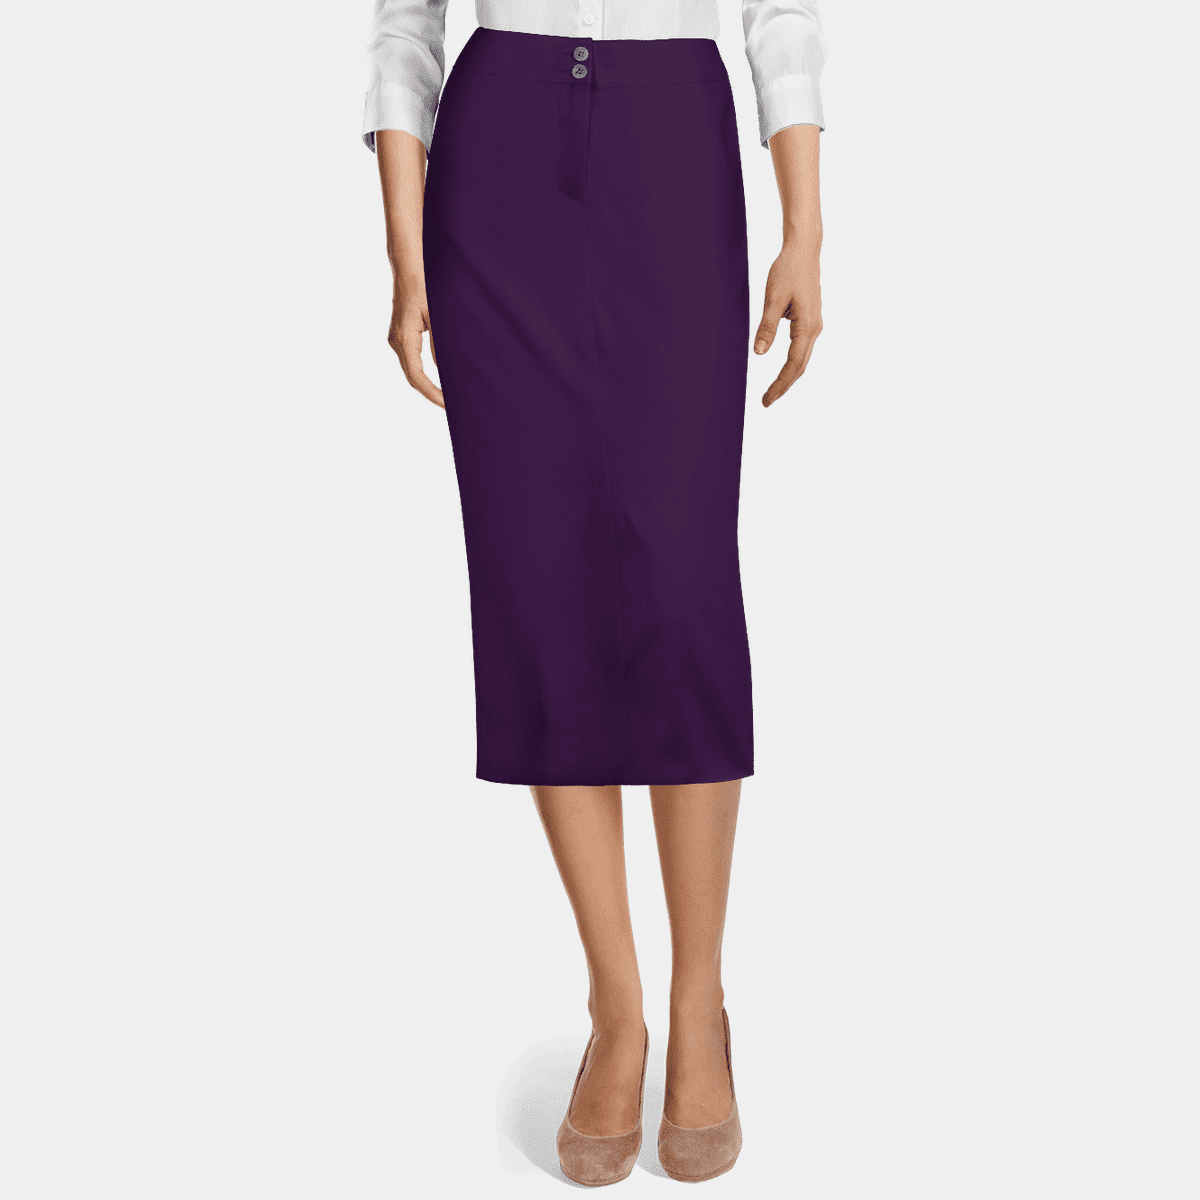 Gracia Pencil Skirt in Purple | Lyst